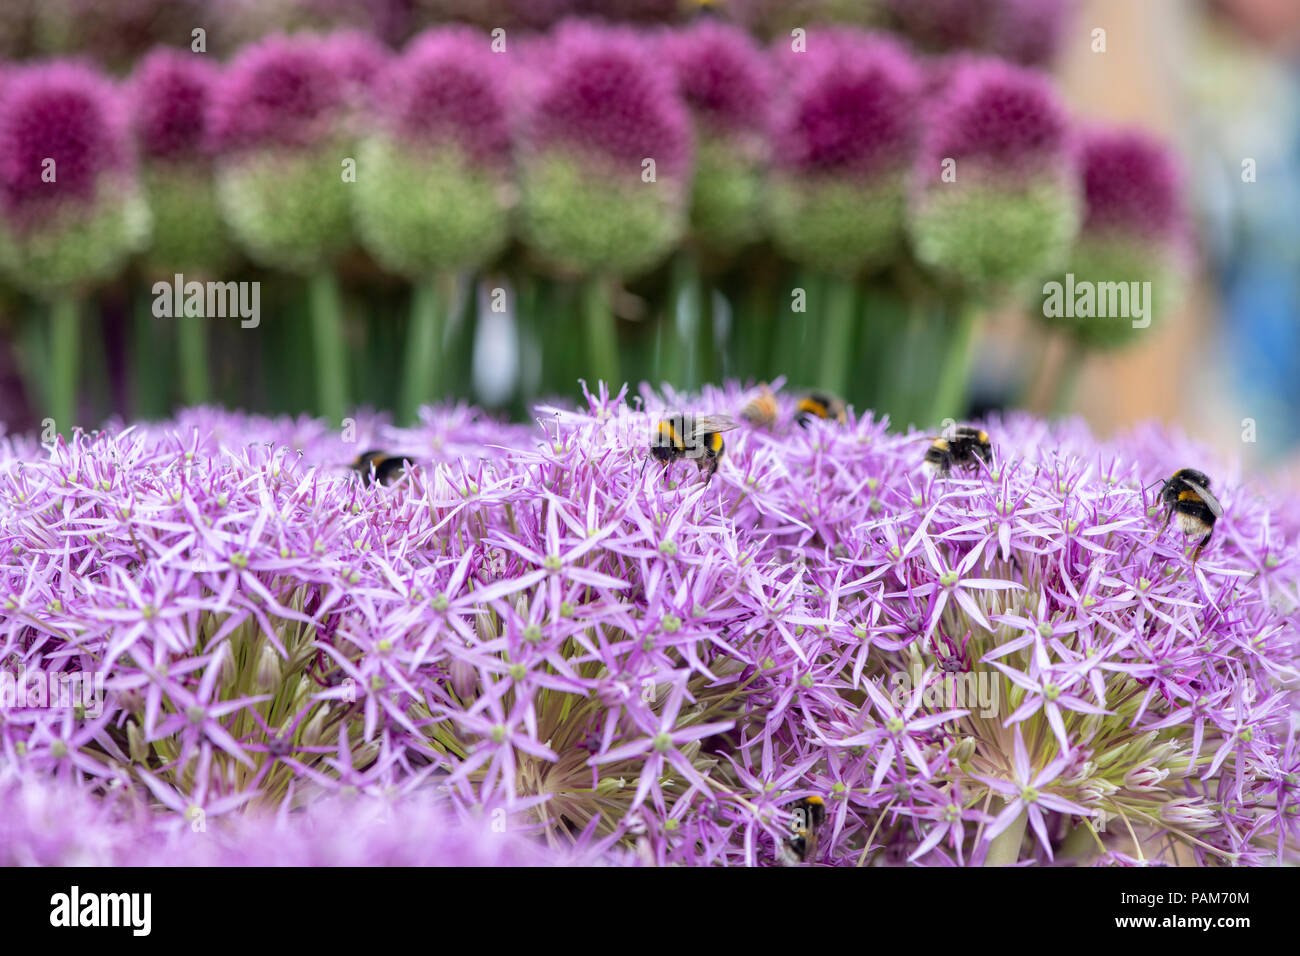 Bombus lucorum. Bumble bees on an allium flower show display. UK Stock Photo